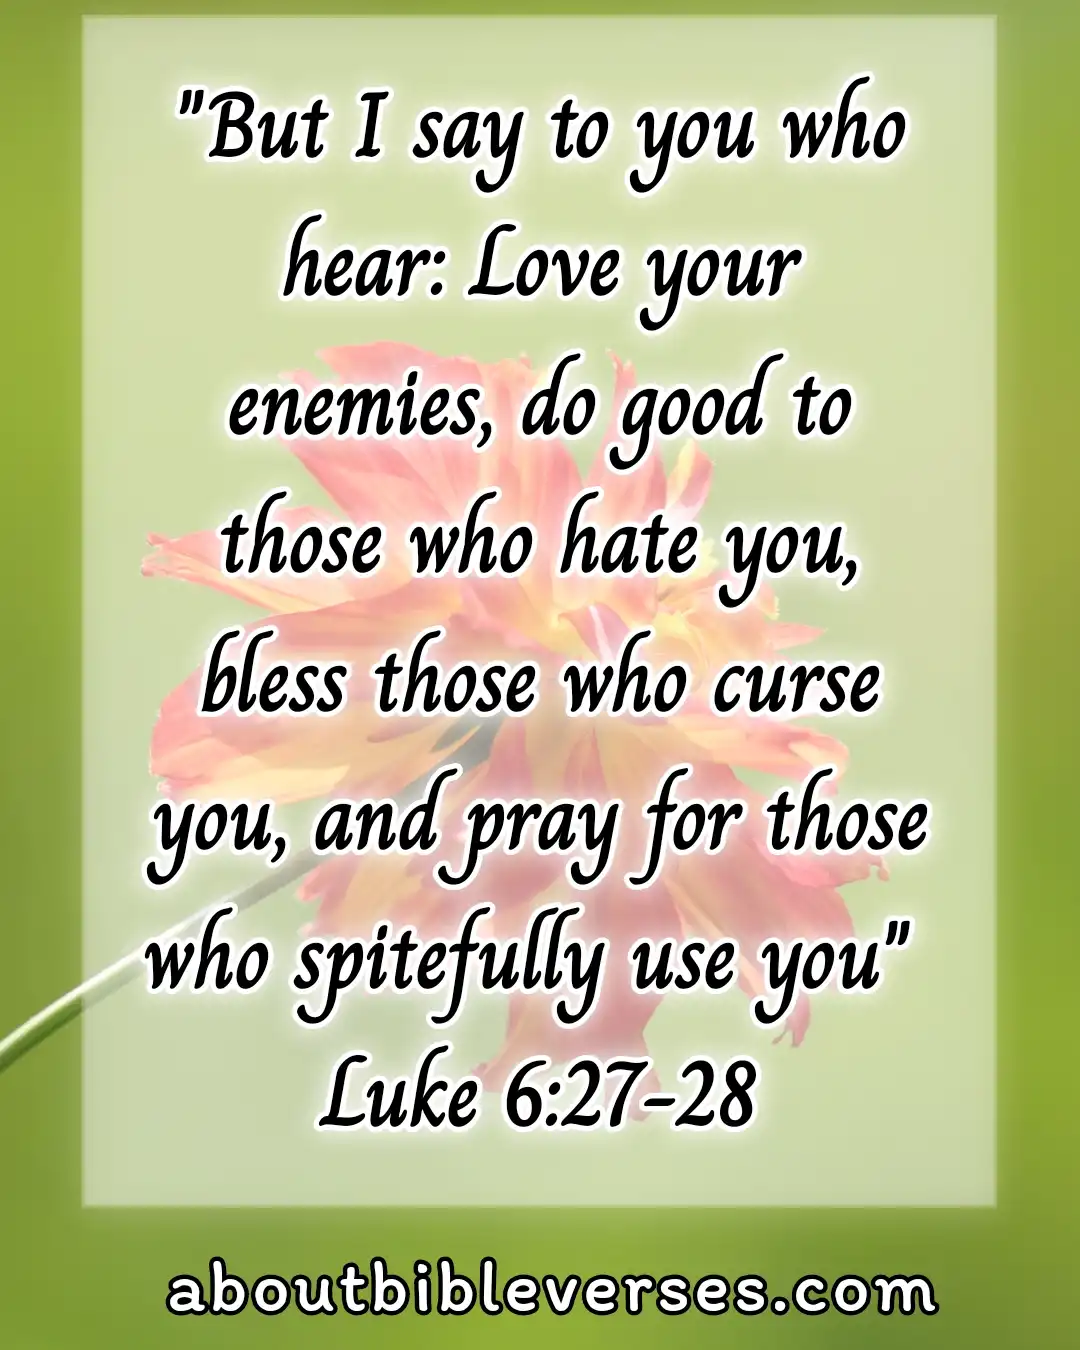 today bible verse (Luke 6:27-28)